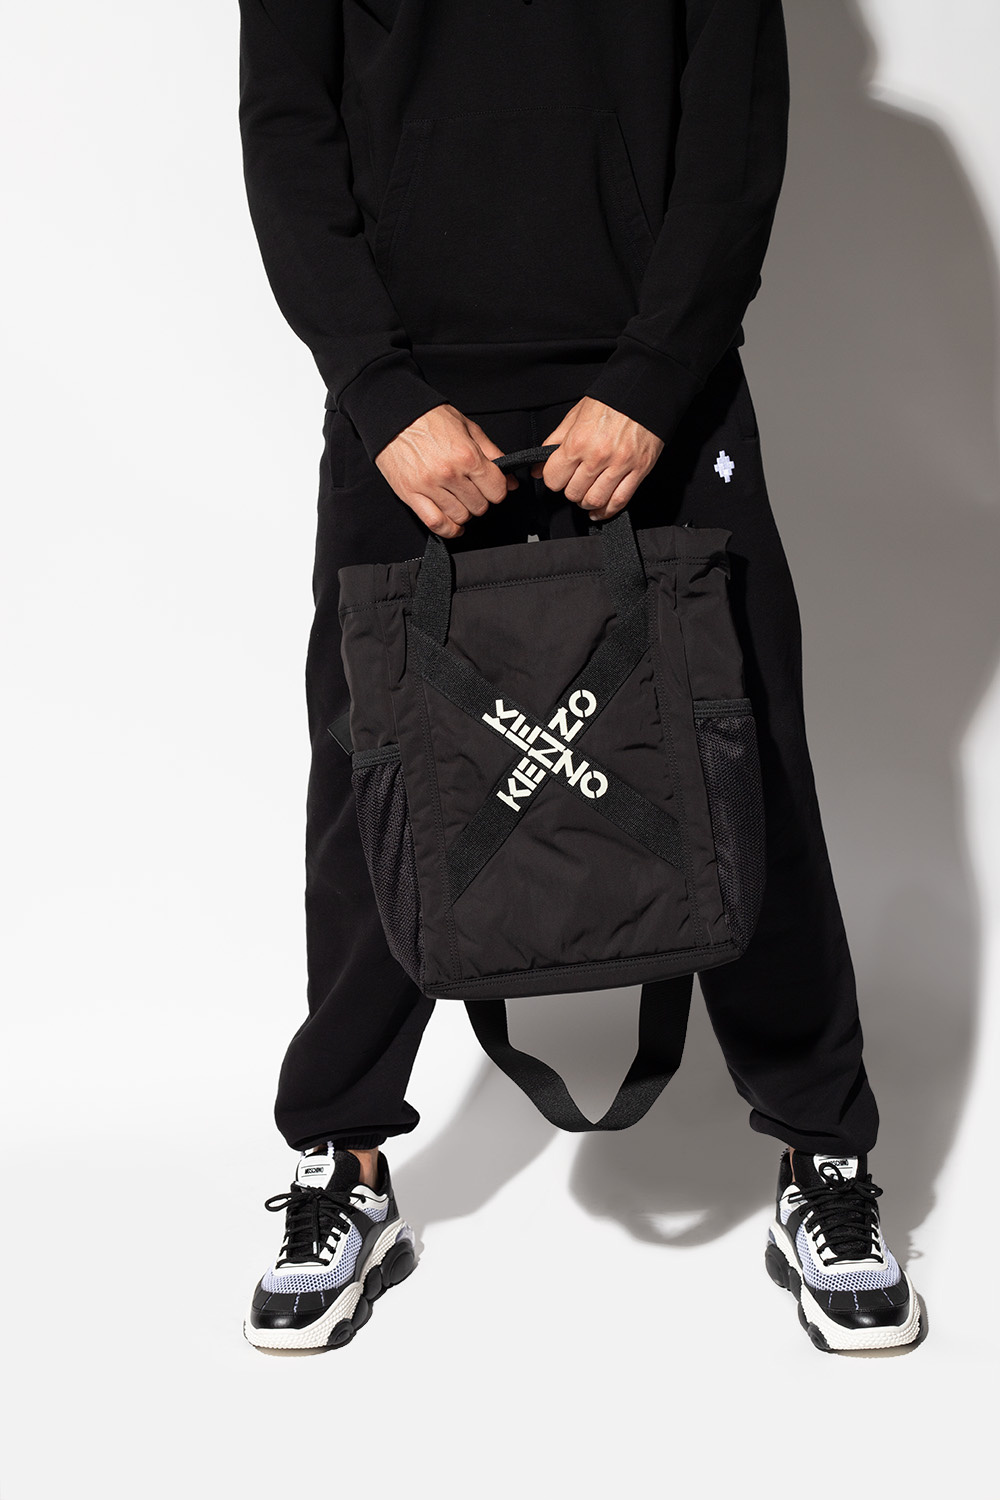 Kenzo textured clutch bag